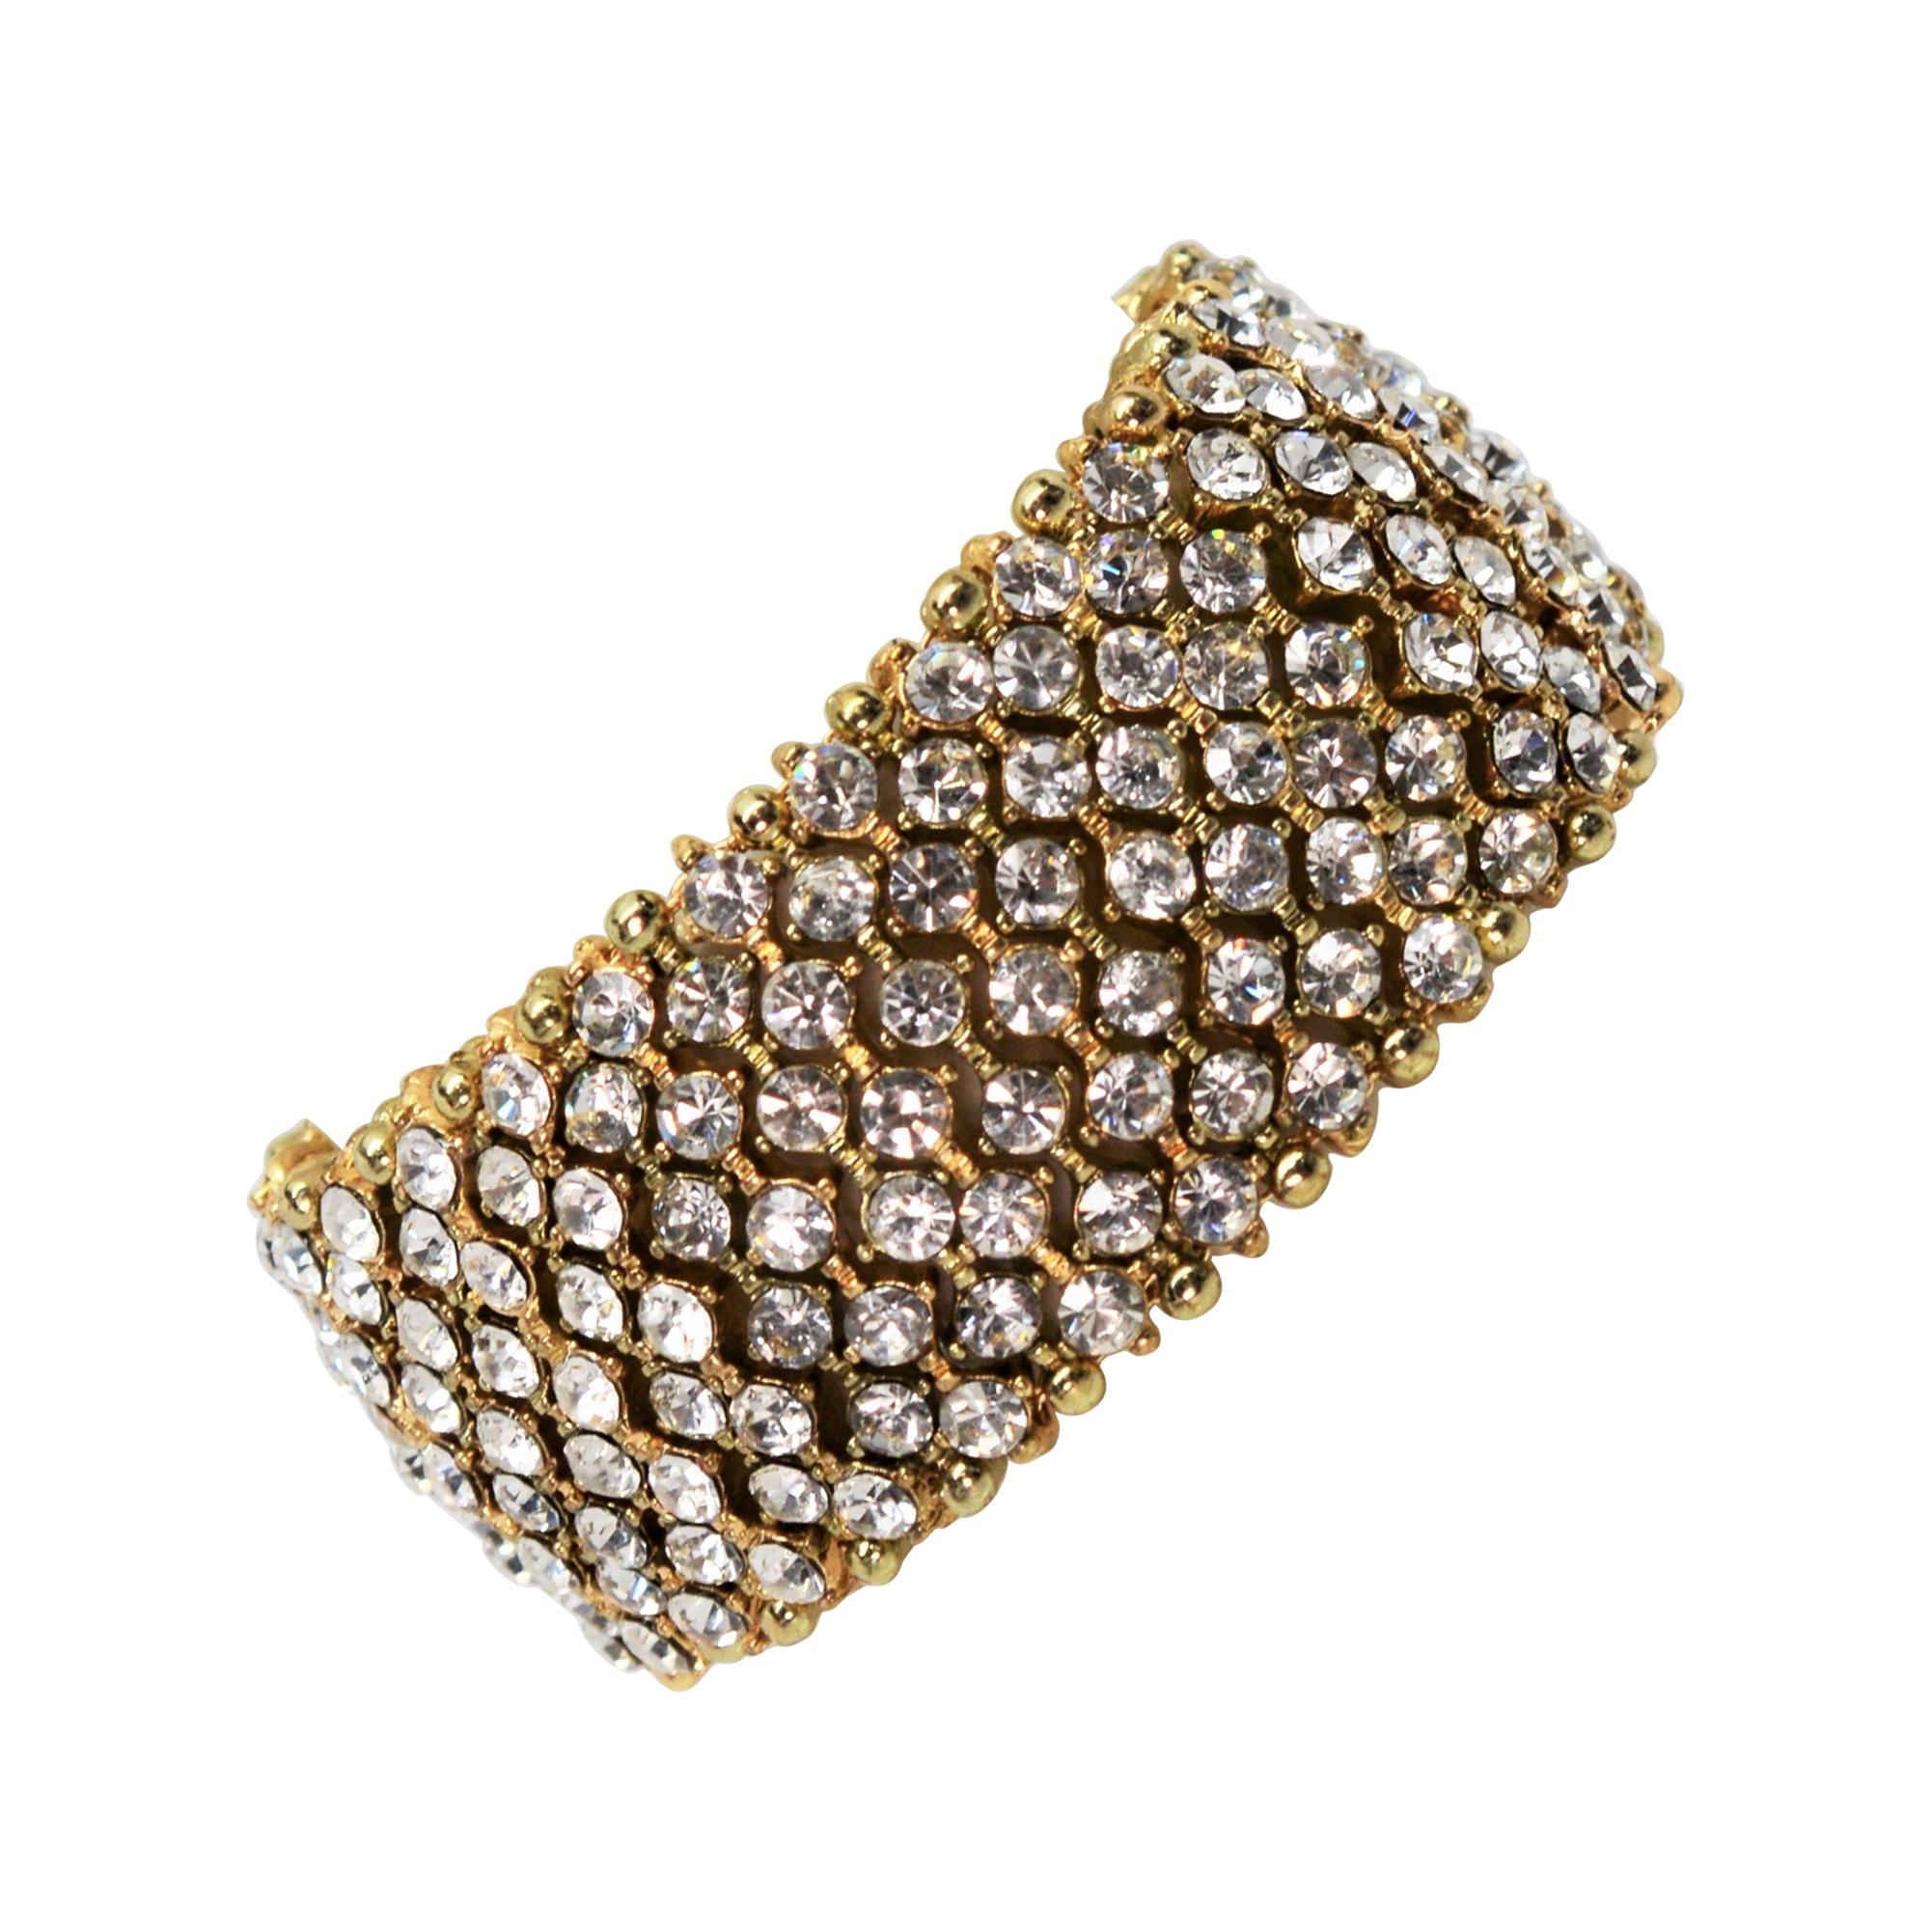 Rhinestone Crystal Costume Jeweled Link Bracelet